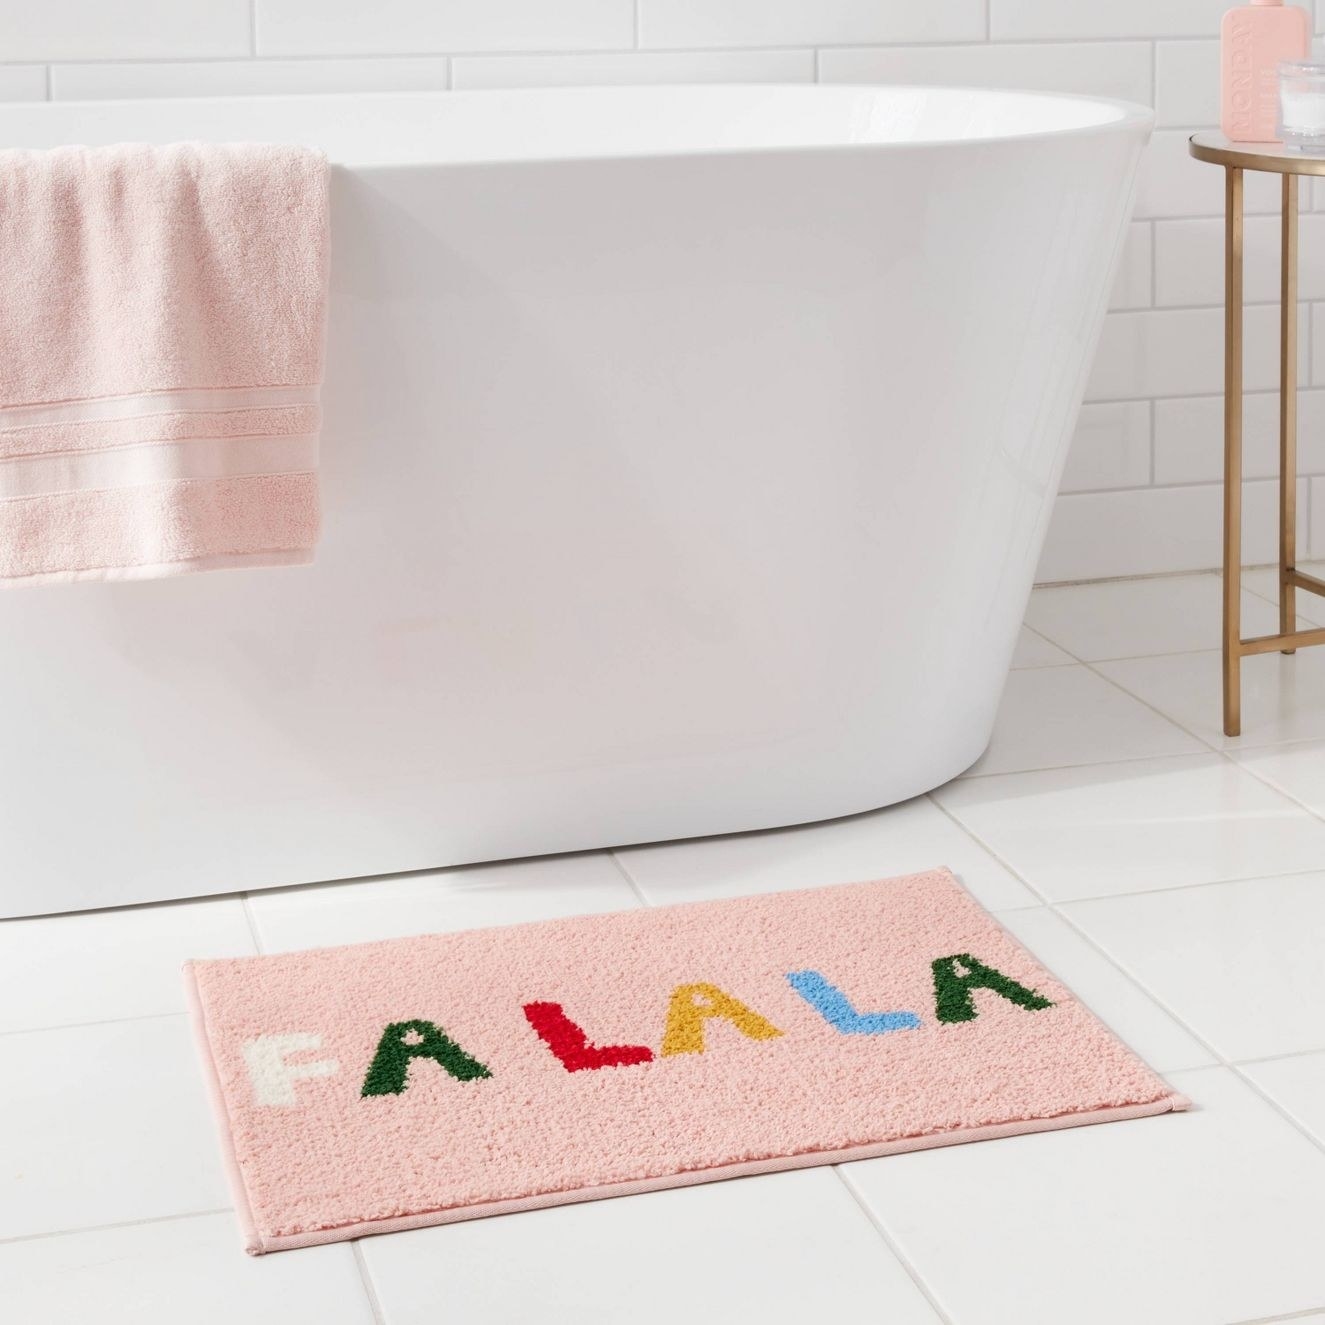 The bath mat that says Fa La La outside a tub